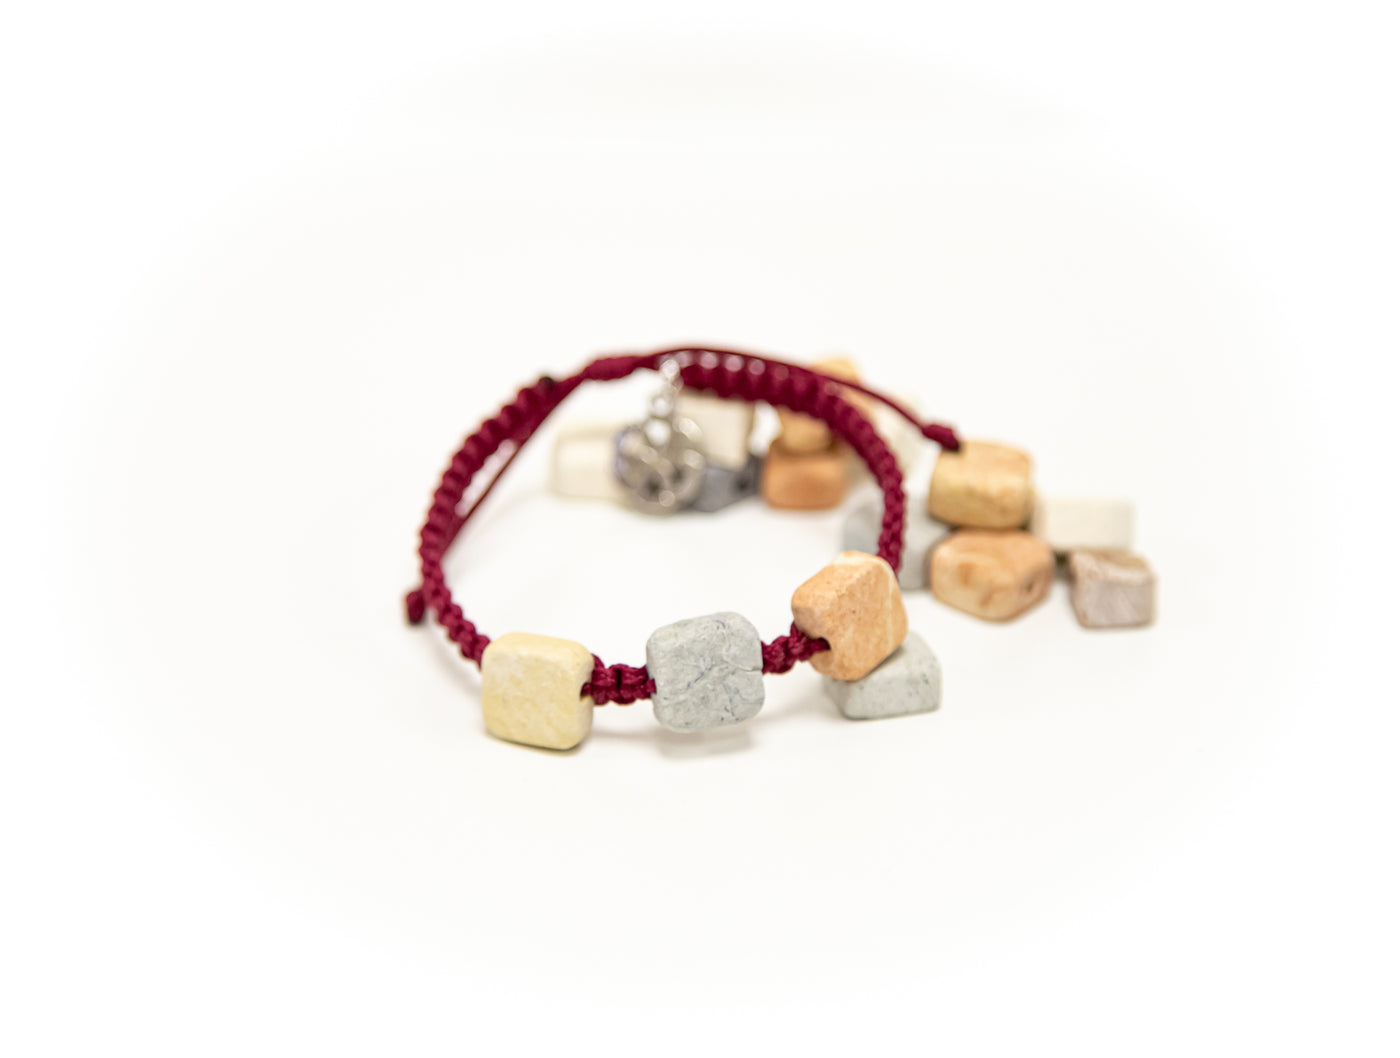 Sponsor Mosaic, Bracelet with Mosaic Stones & Silver Magdala Rosette charm